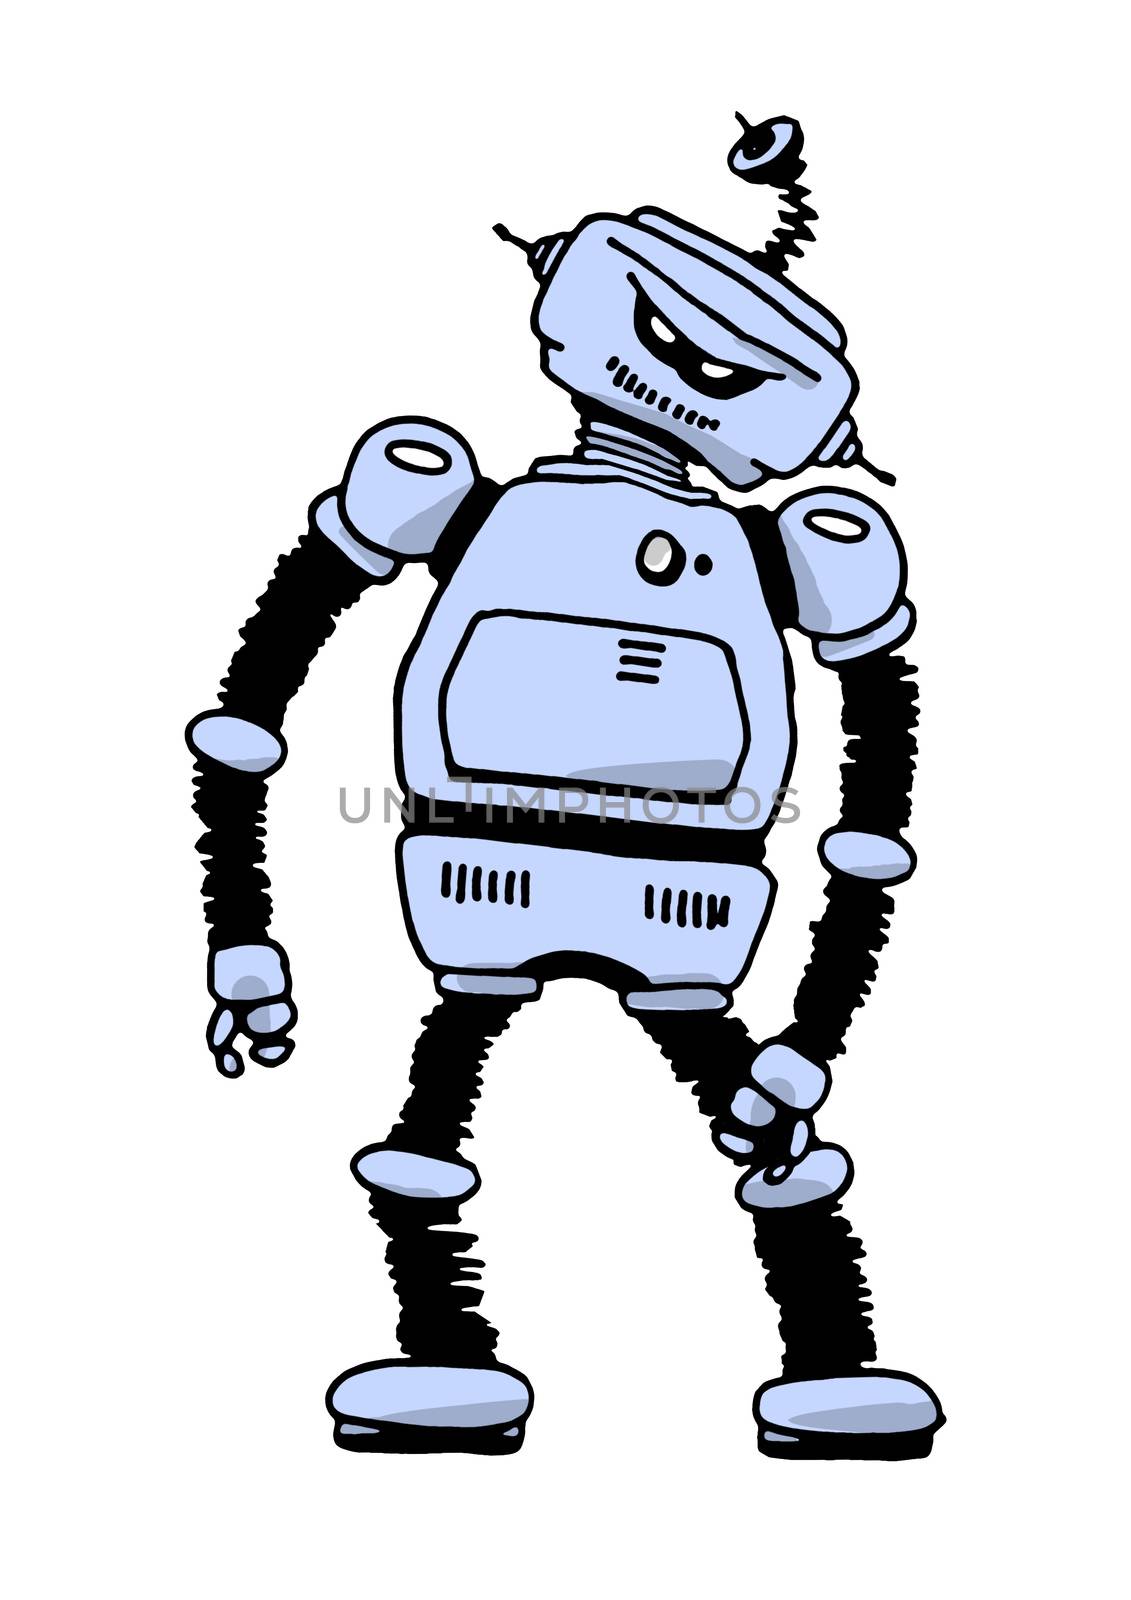 An illustration of an angry tin robot